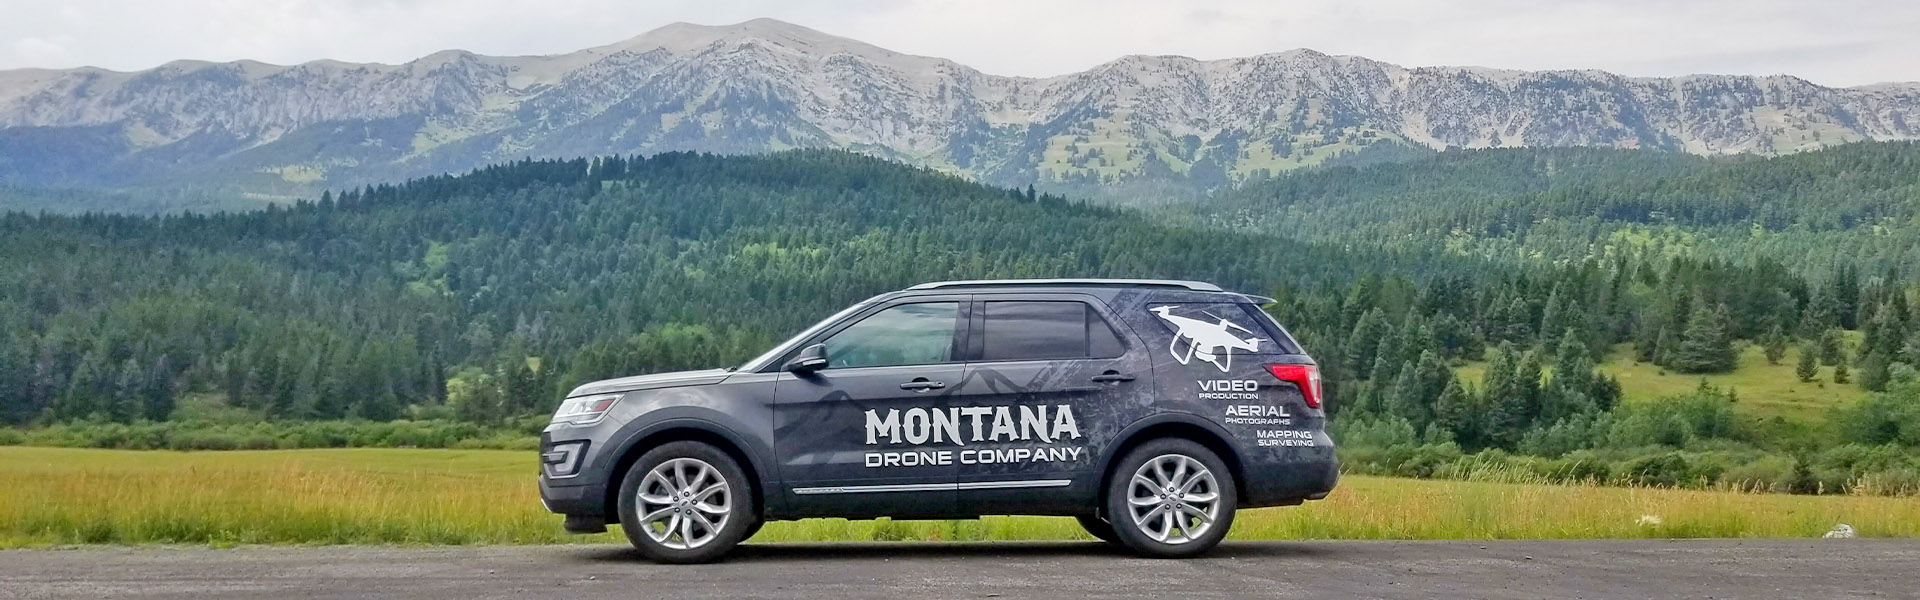 Montana Drone Pilots Uav Photography Video Services